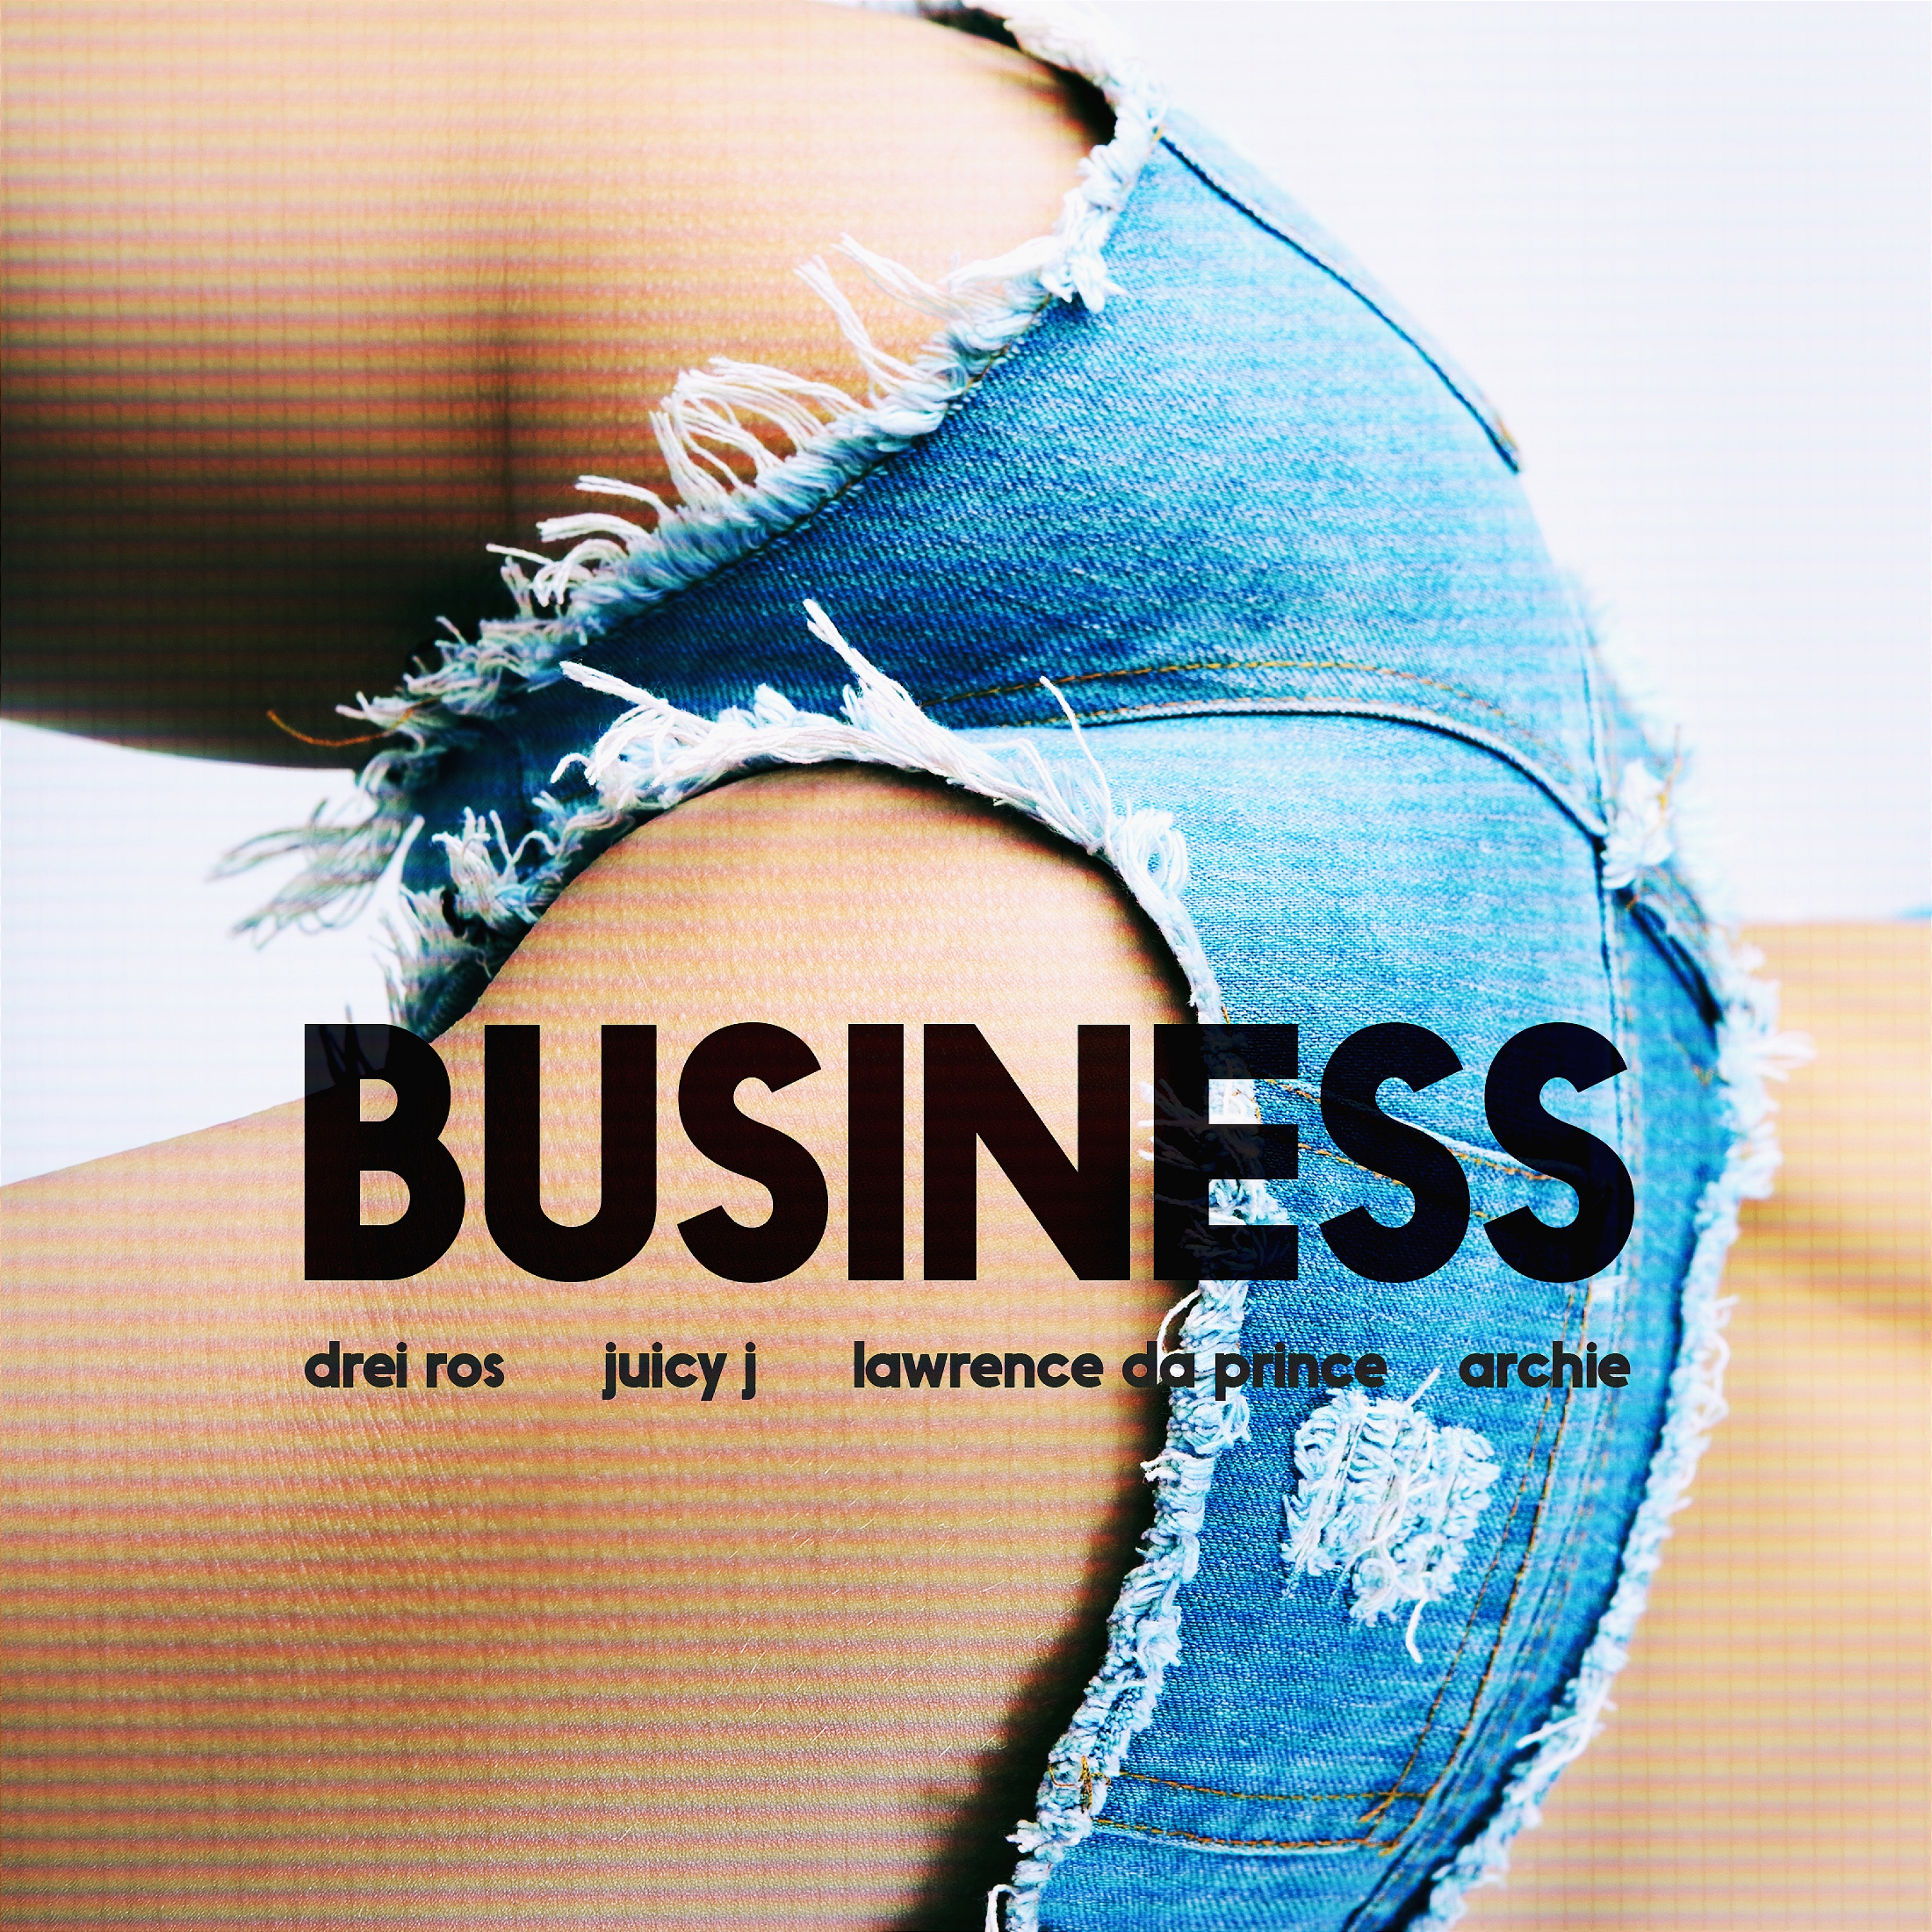 Business (feat. Juicy J, Lawrence da Prince & Archie)